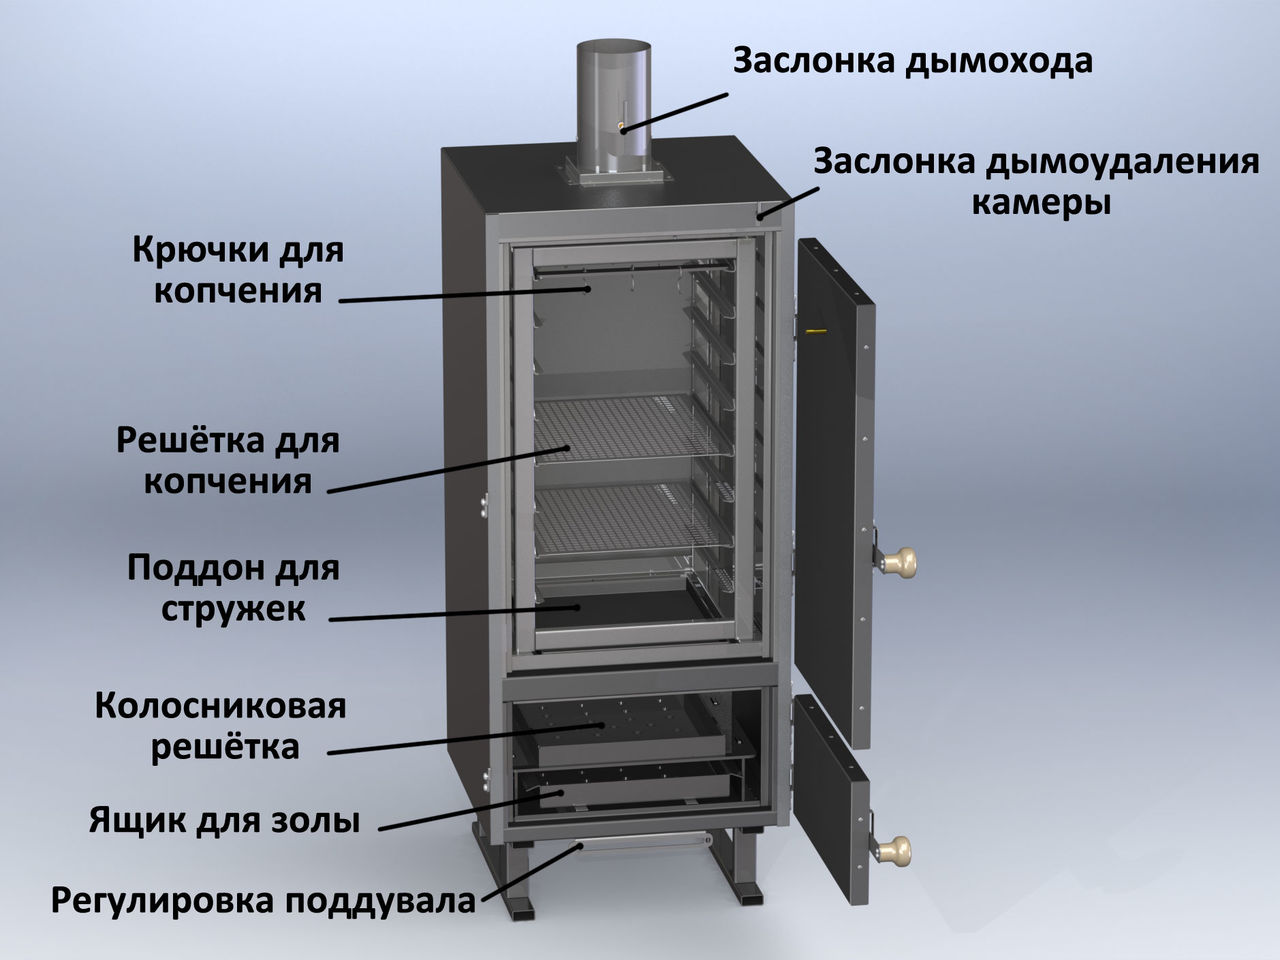 Coal smoker Vesta Model K scheme